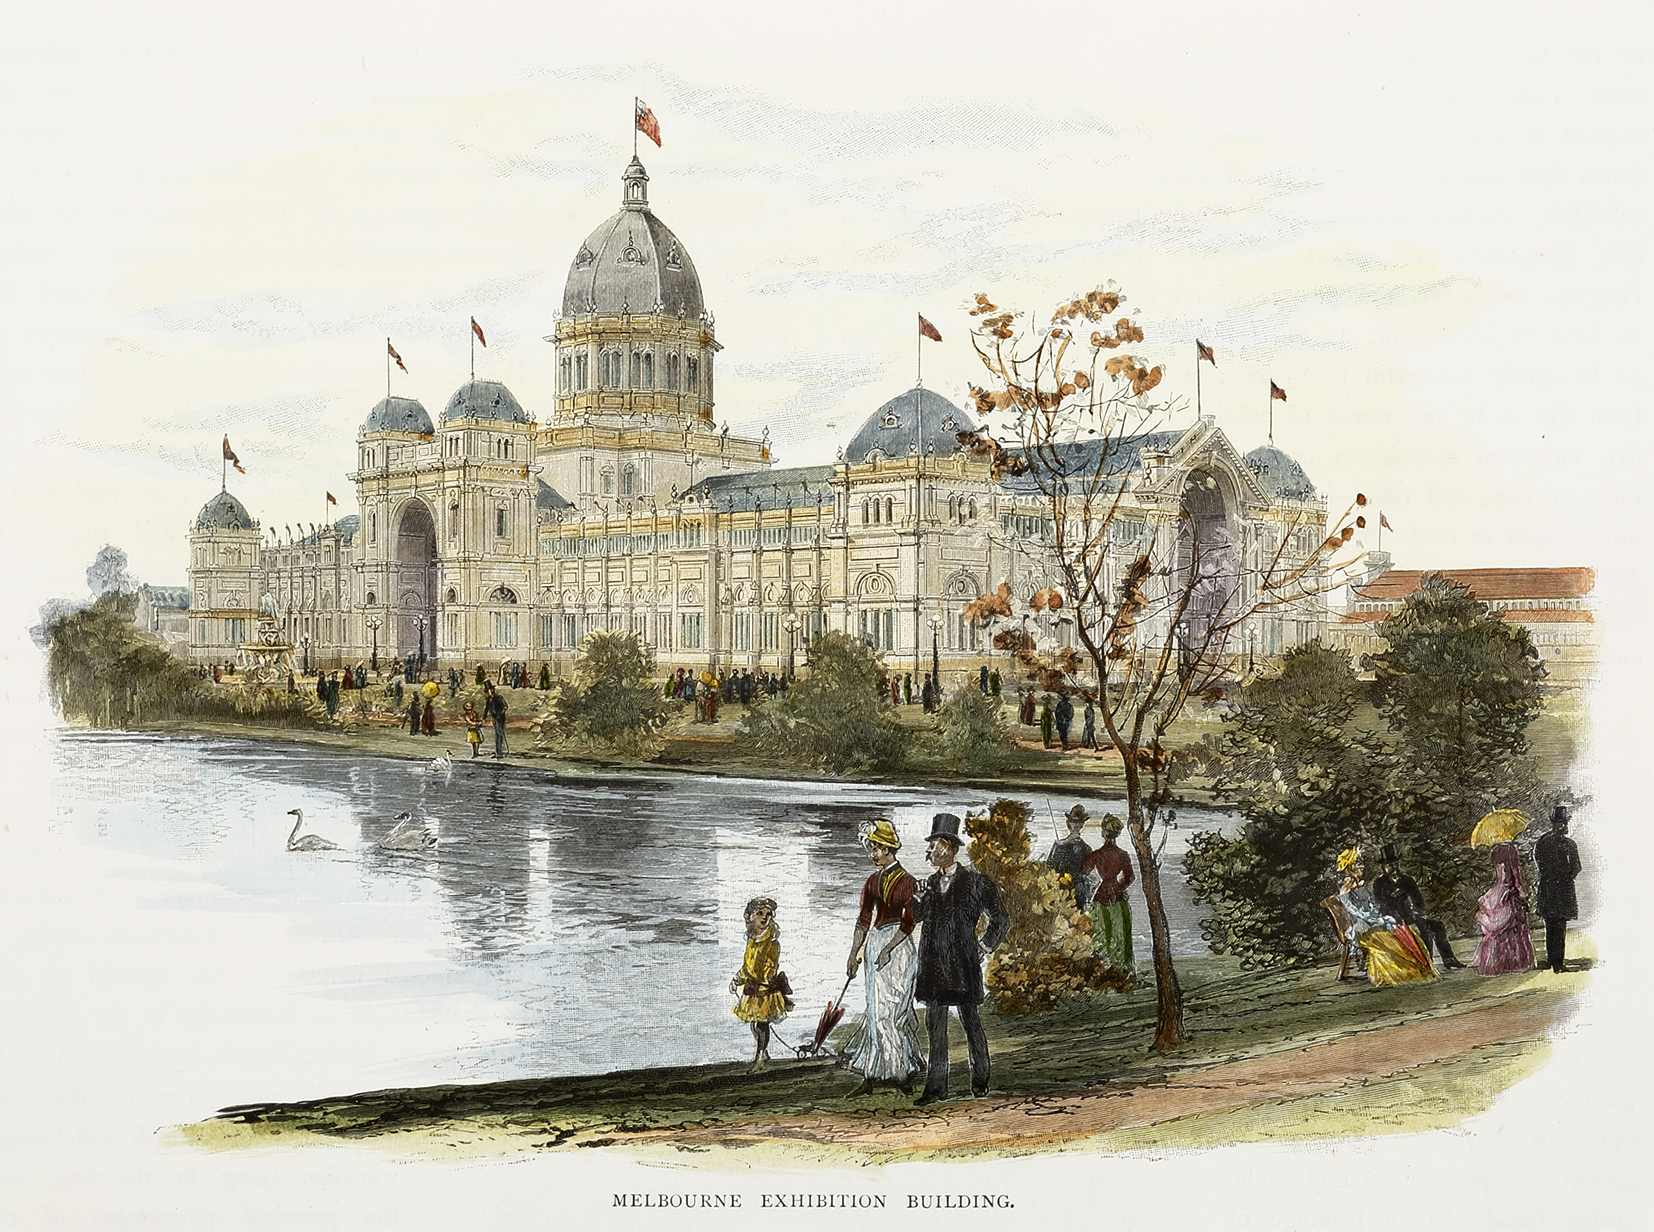 Melbourne Exhibition Building - Antique View from 1886